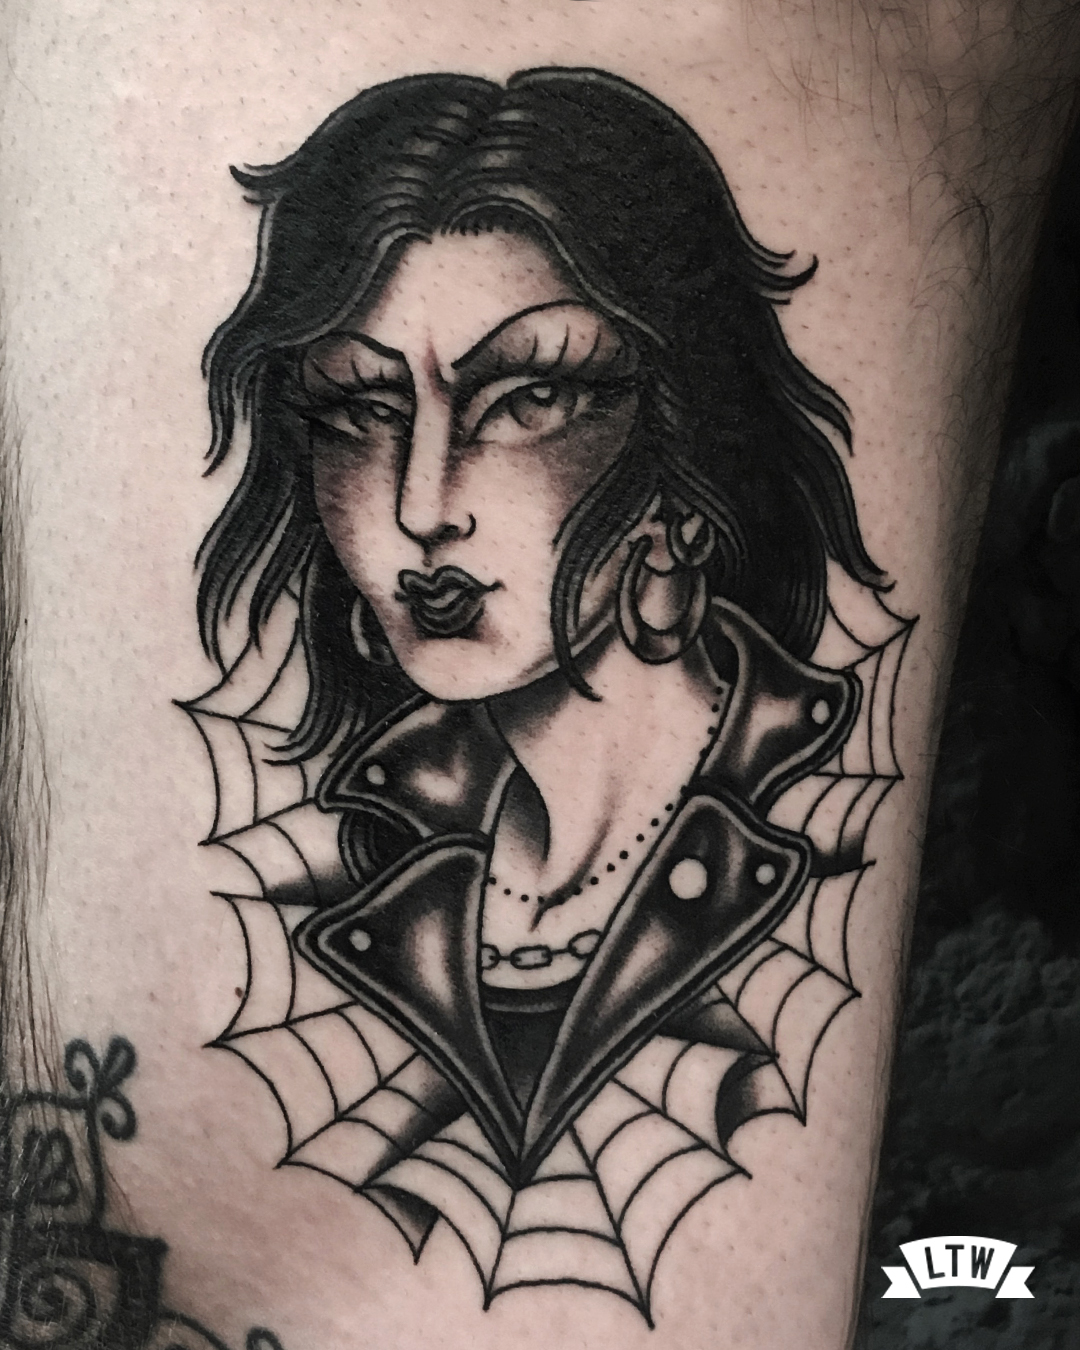 Black and white punk girl tattooed by Enol